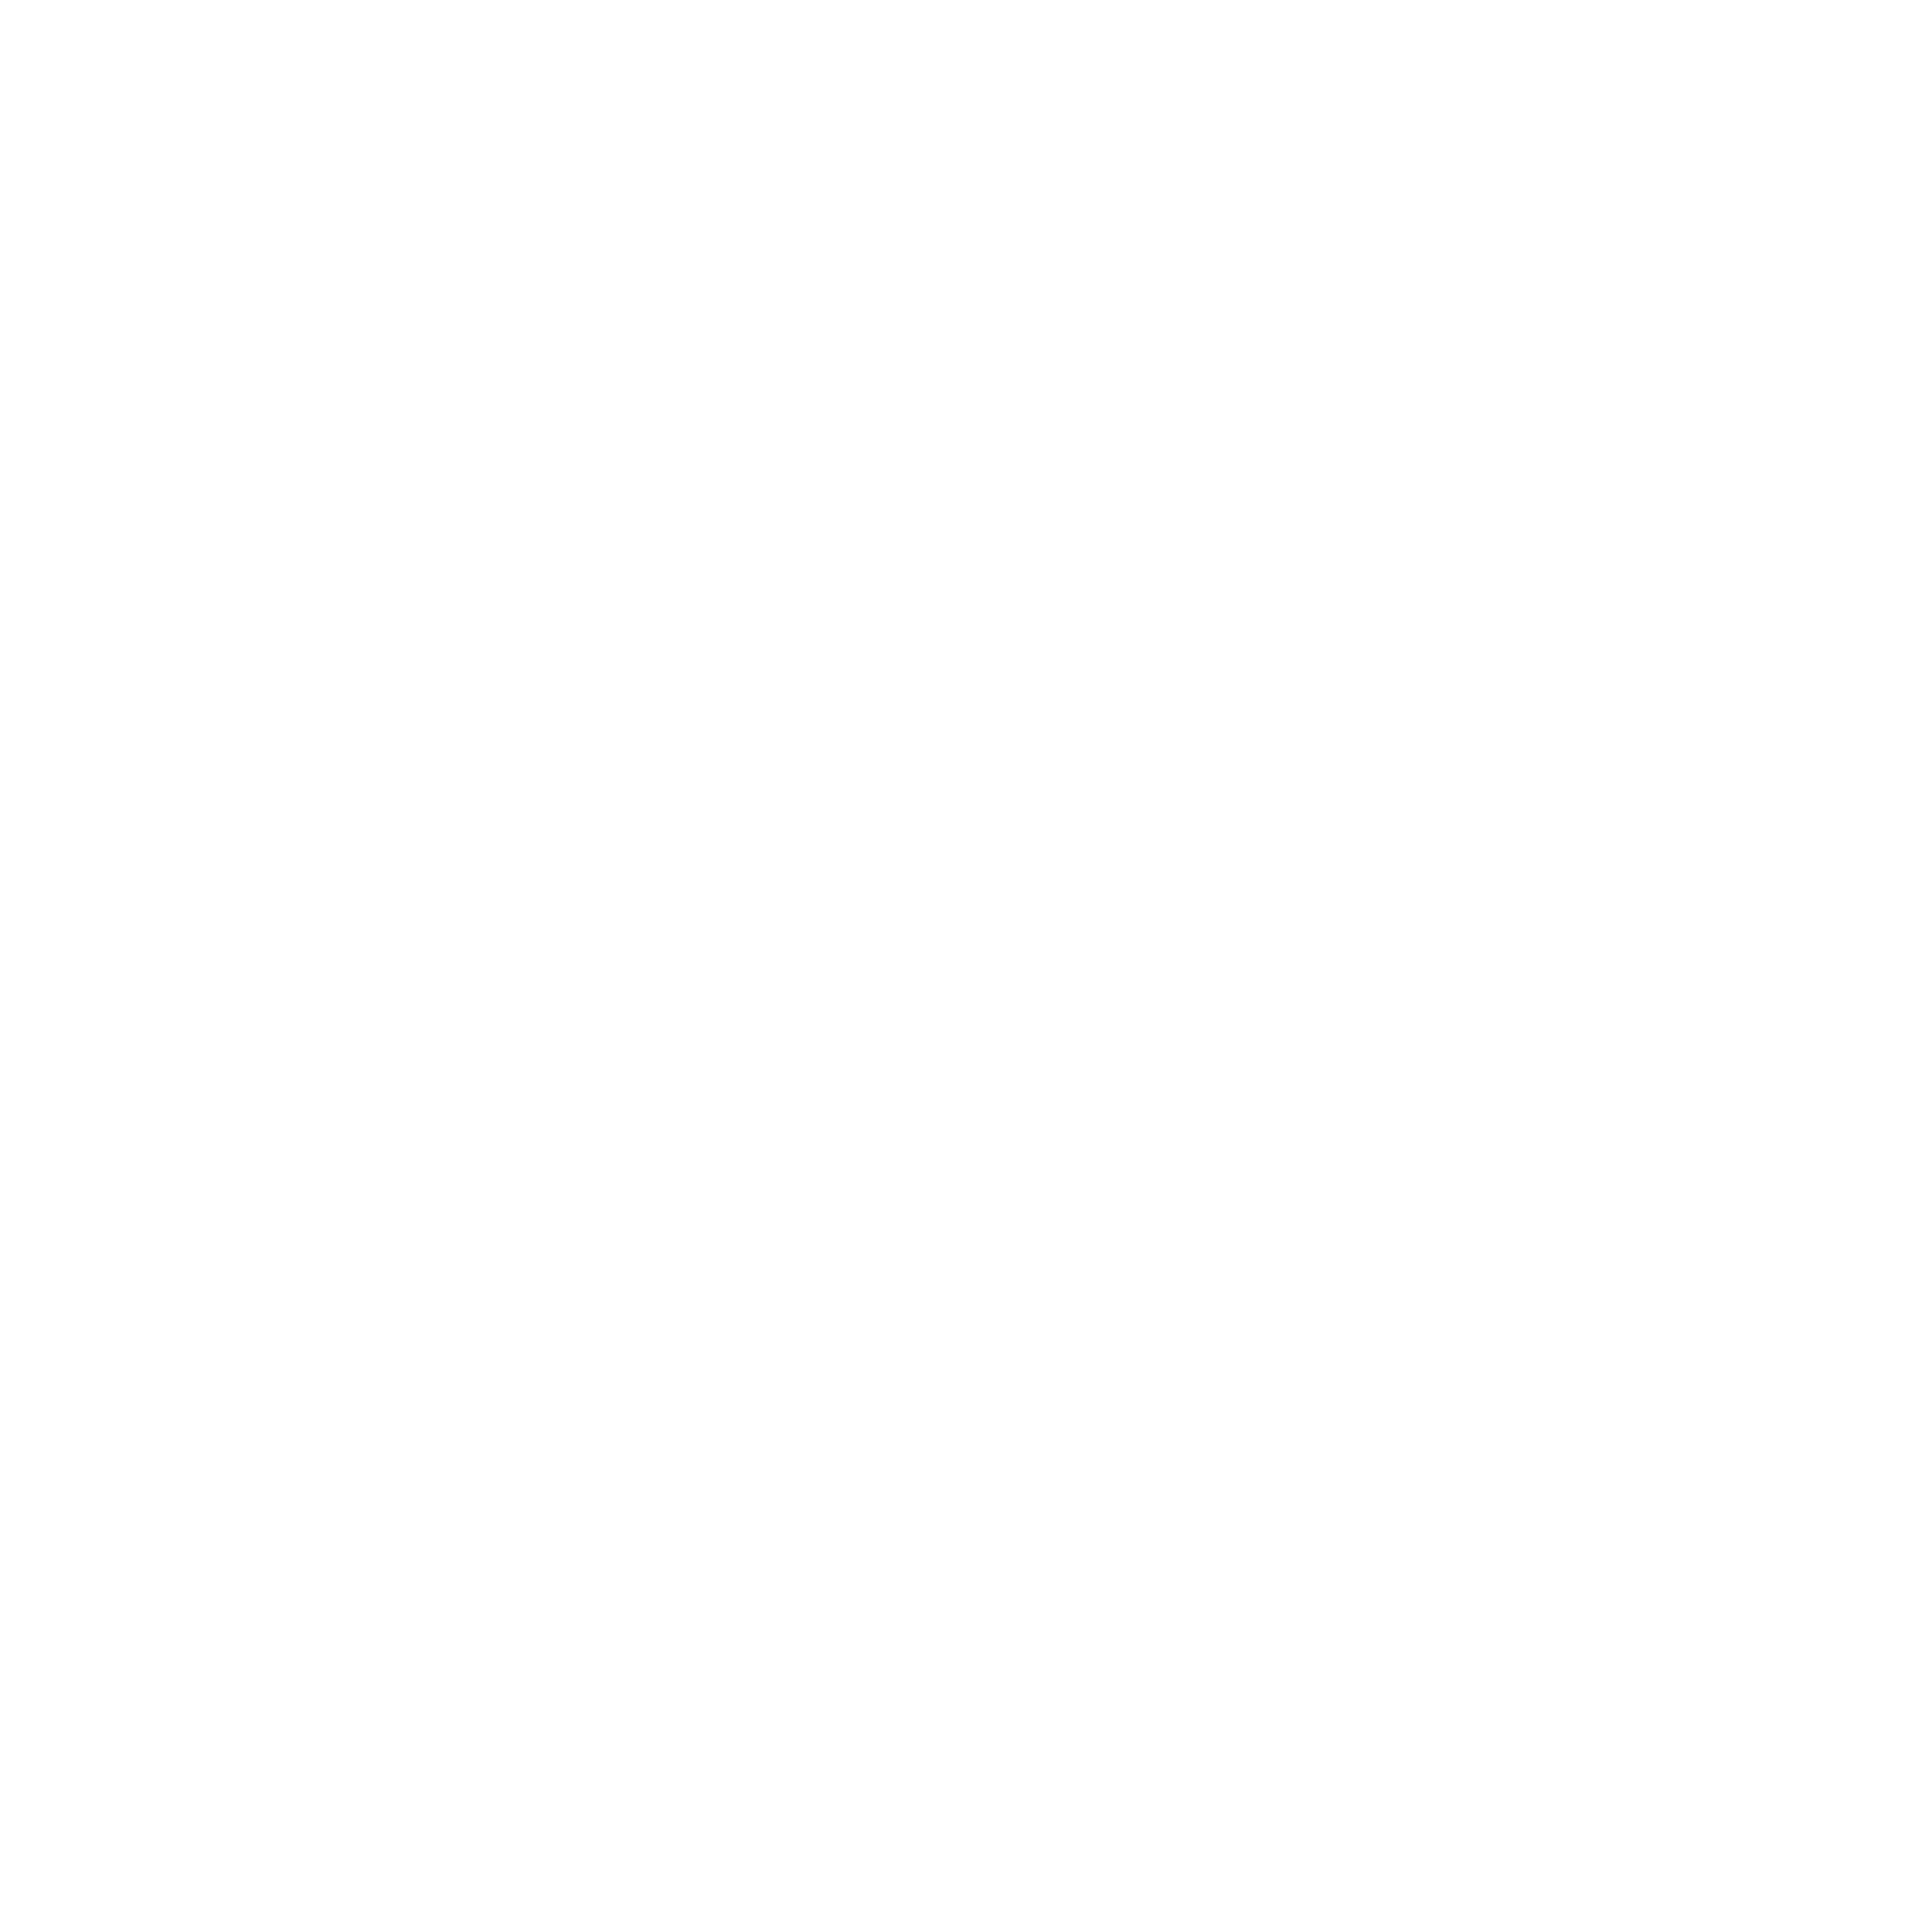 Black and Yellow Bird Logo - YellowBird Foundation Logo PNG Transparent & SVG Vector